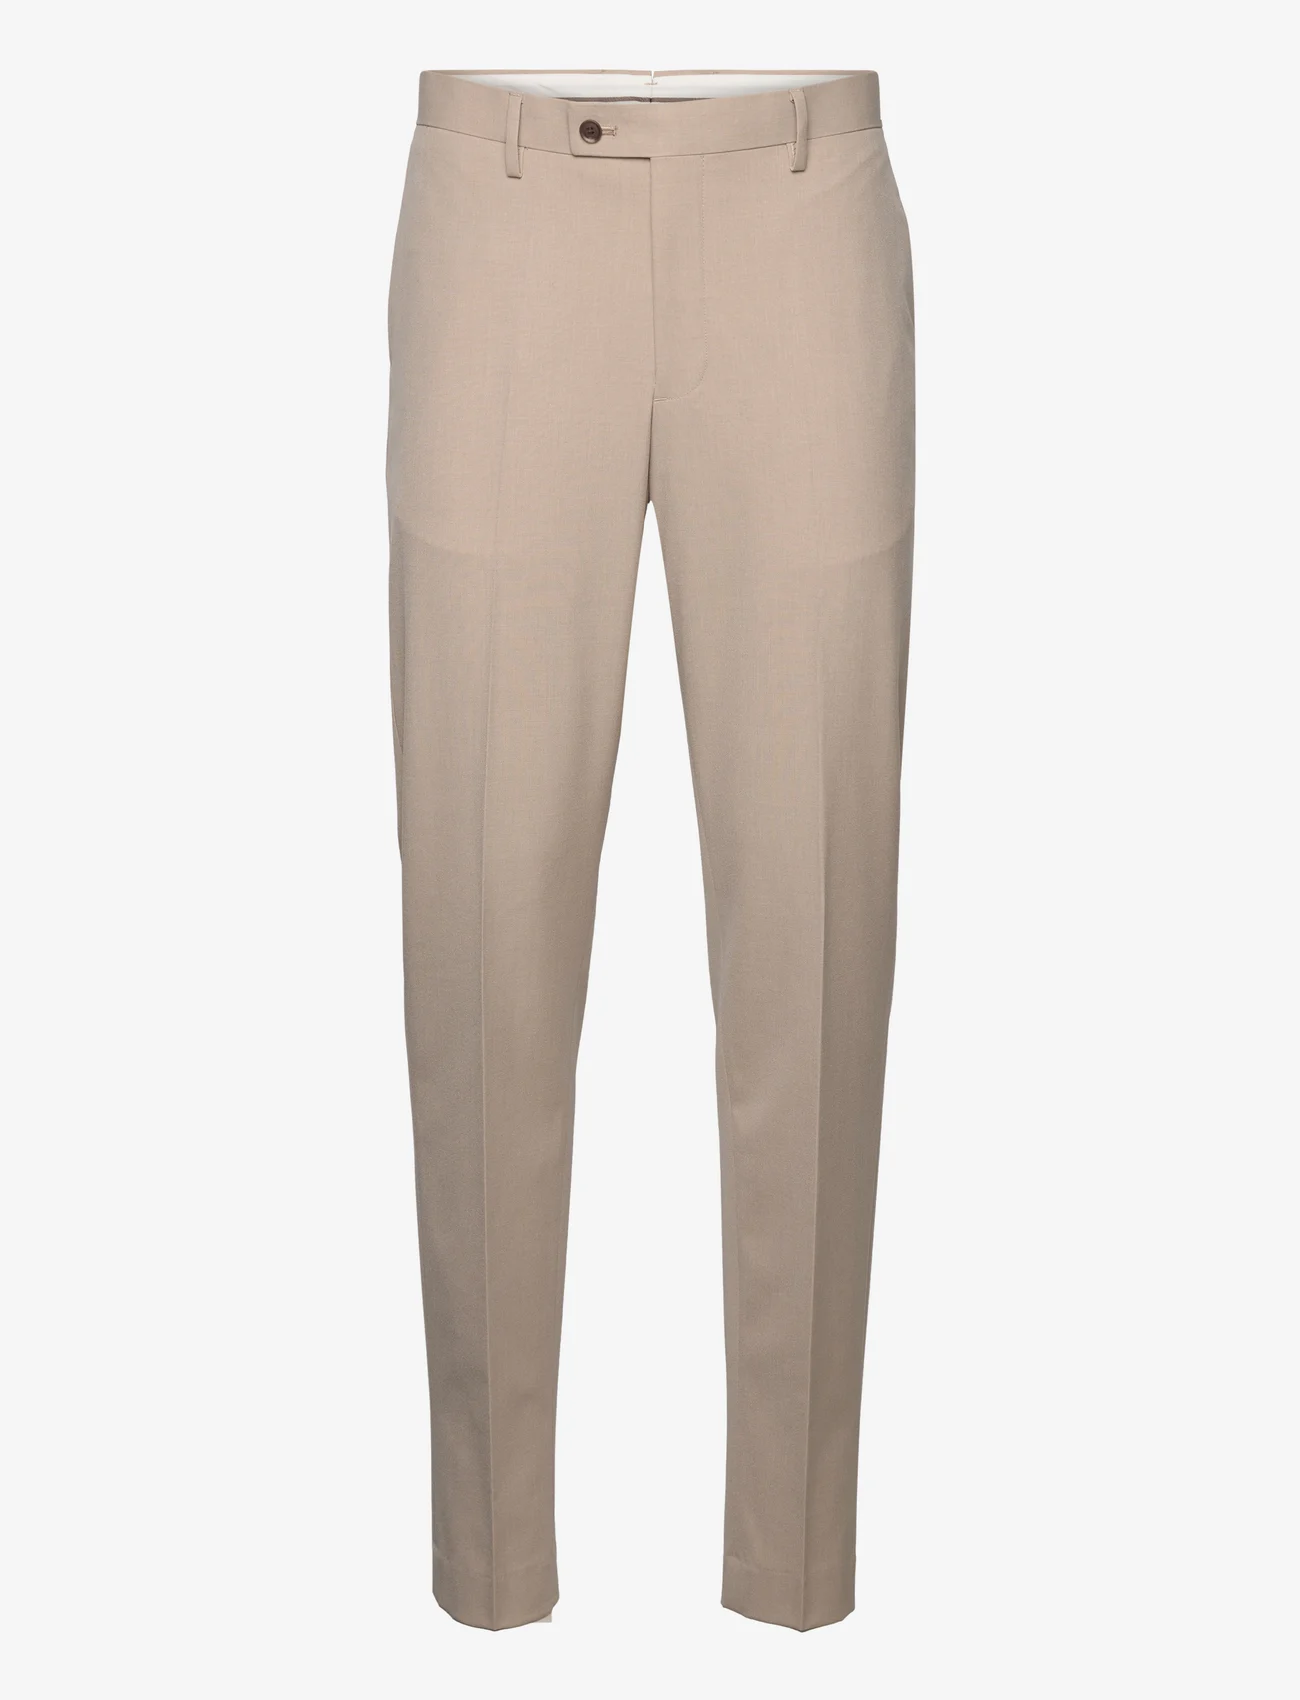 Mango - Suit trousers - chinot - light beige - 0